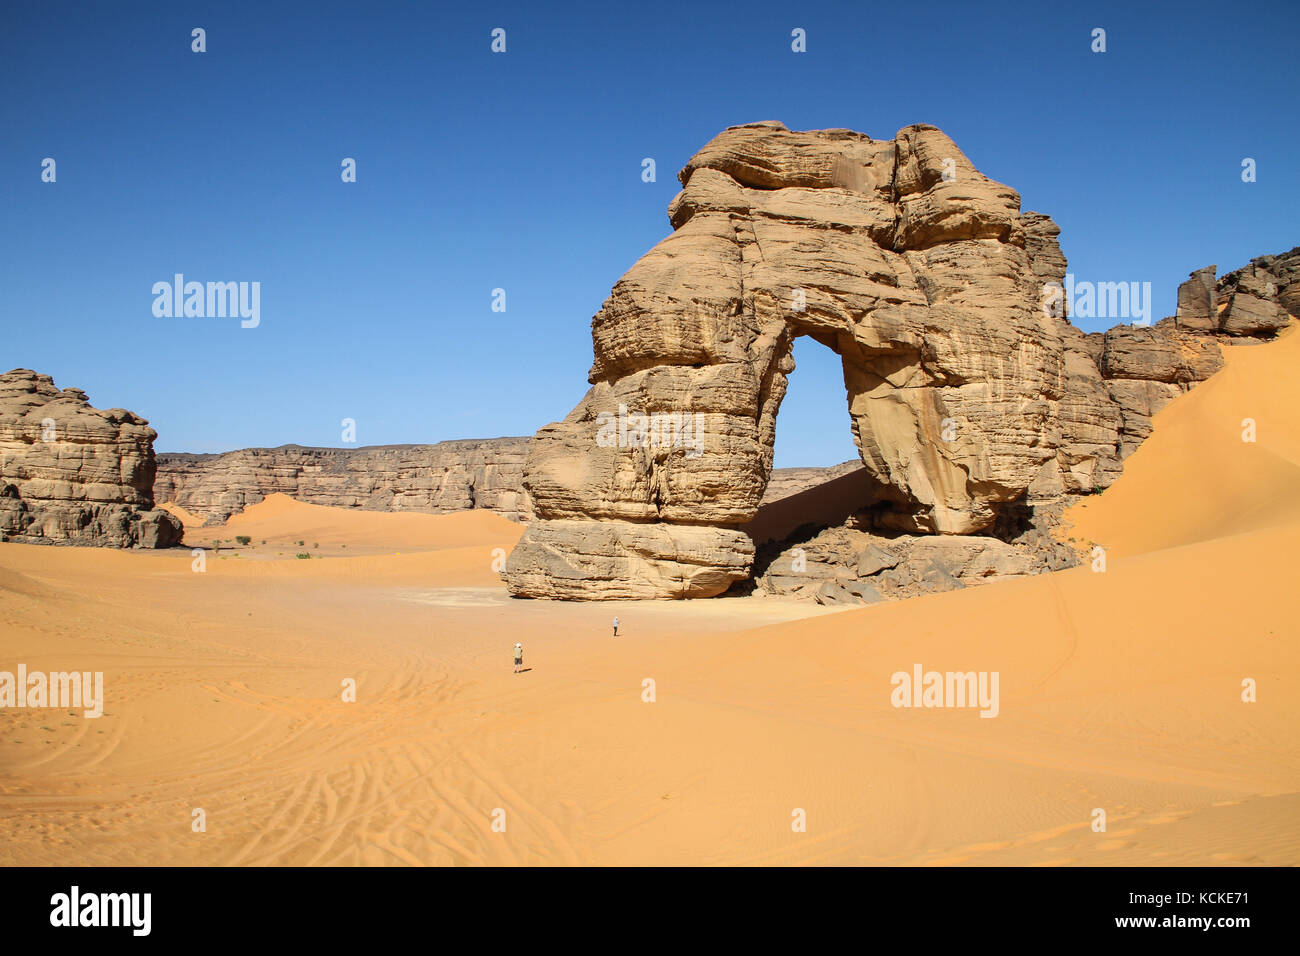 Forzhaga natural rock arch, Akakus (Acacus) Mountains, Sahara Desert, Libya, 2010 Stock Photo